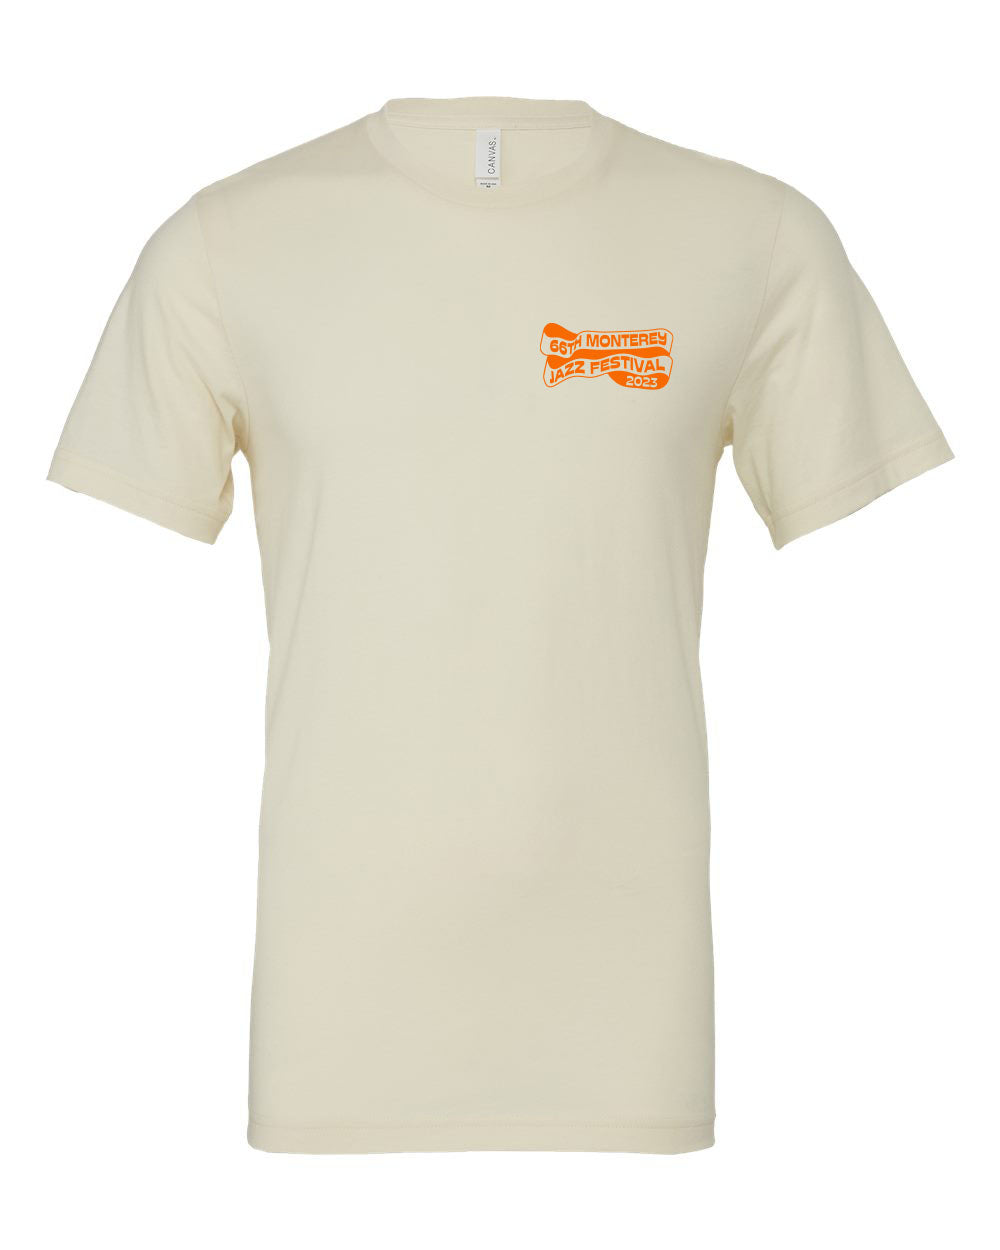 2023 Monterey Jazz Festival "Coast Road" Ladies Natural T-Shirt